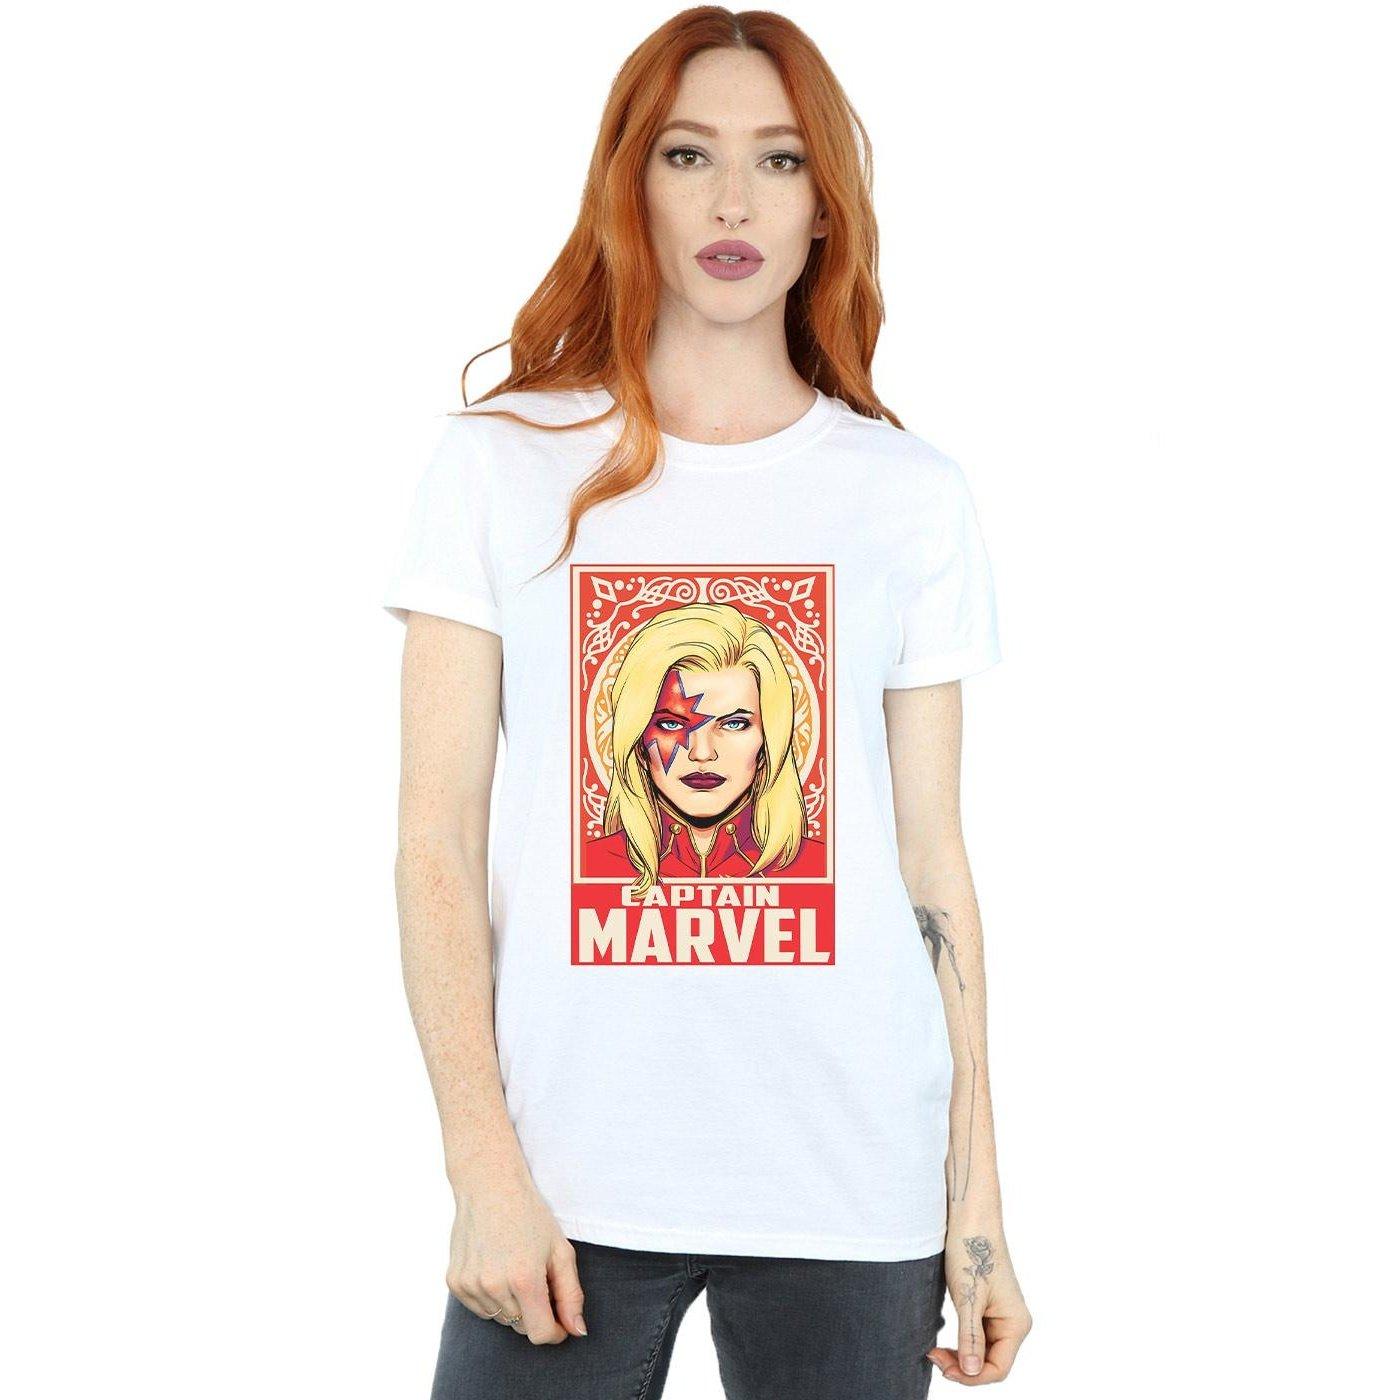 Captain Marvel  Tshirt ORNAMENT 